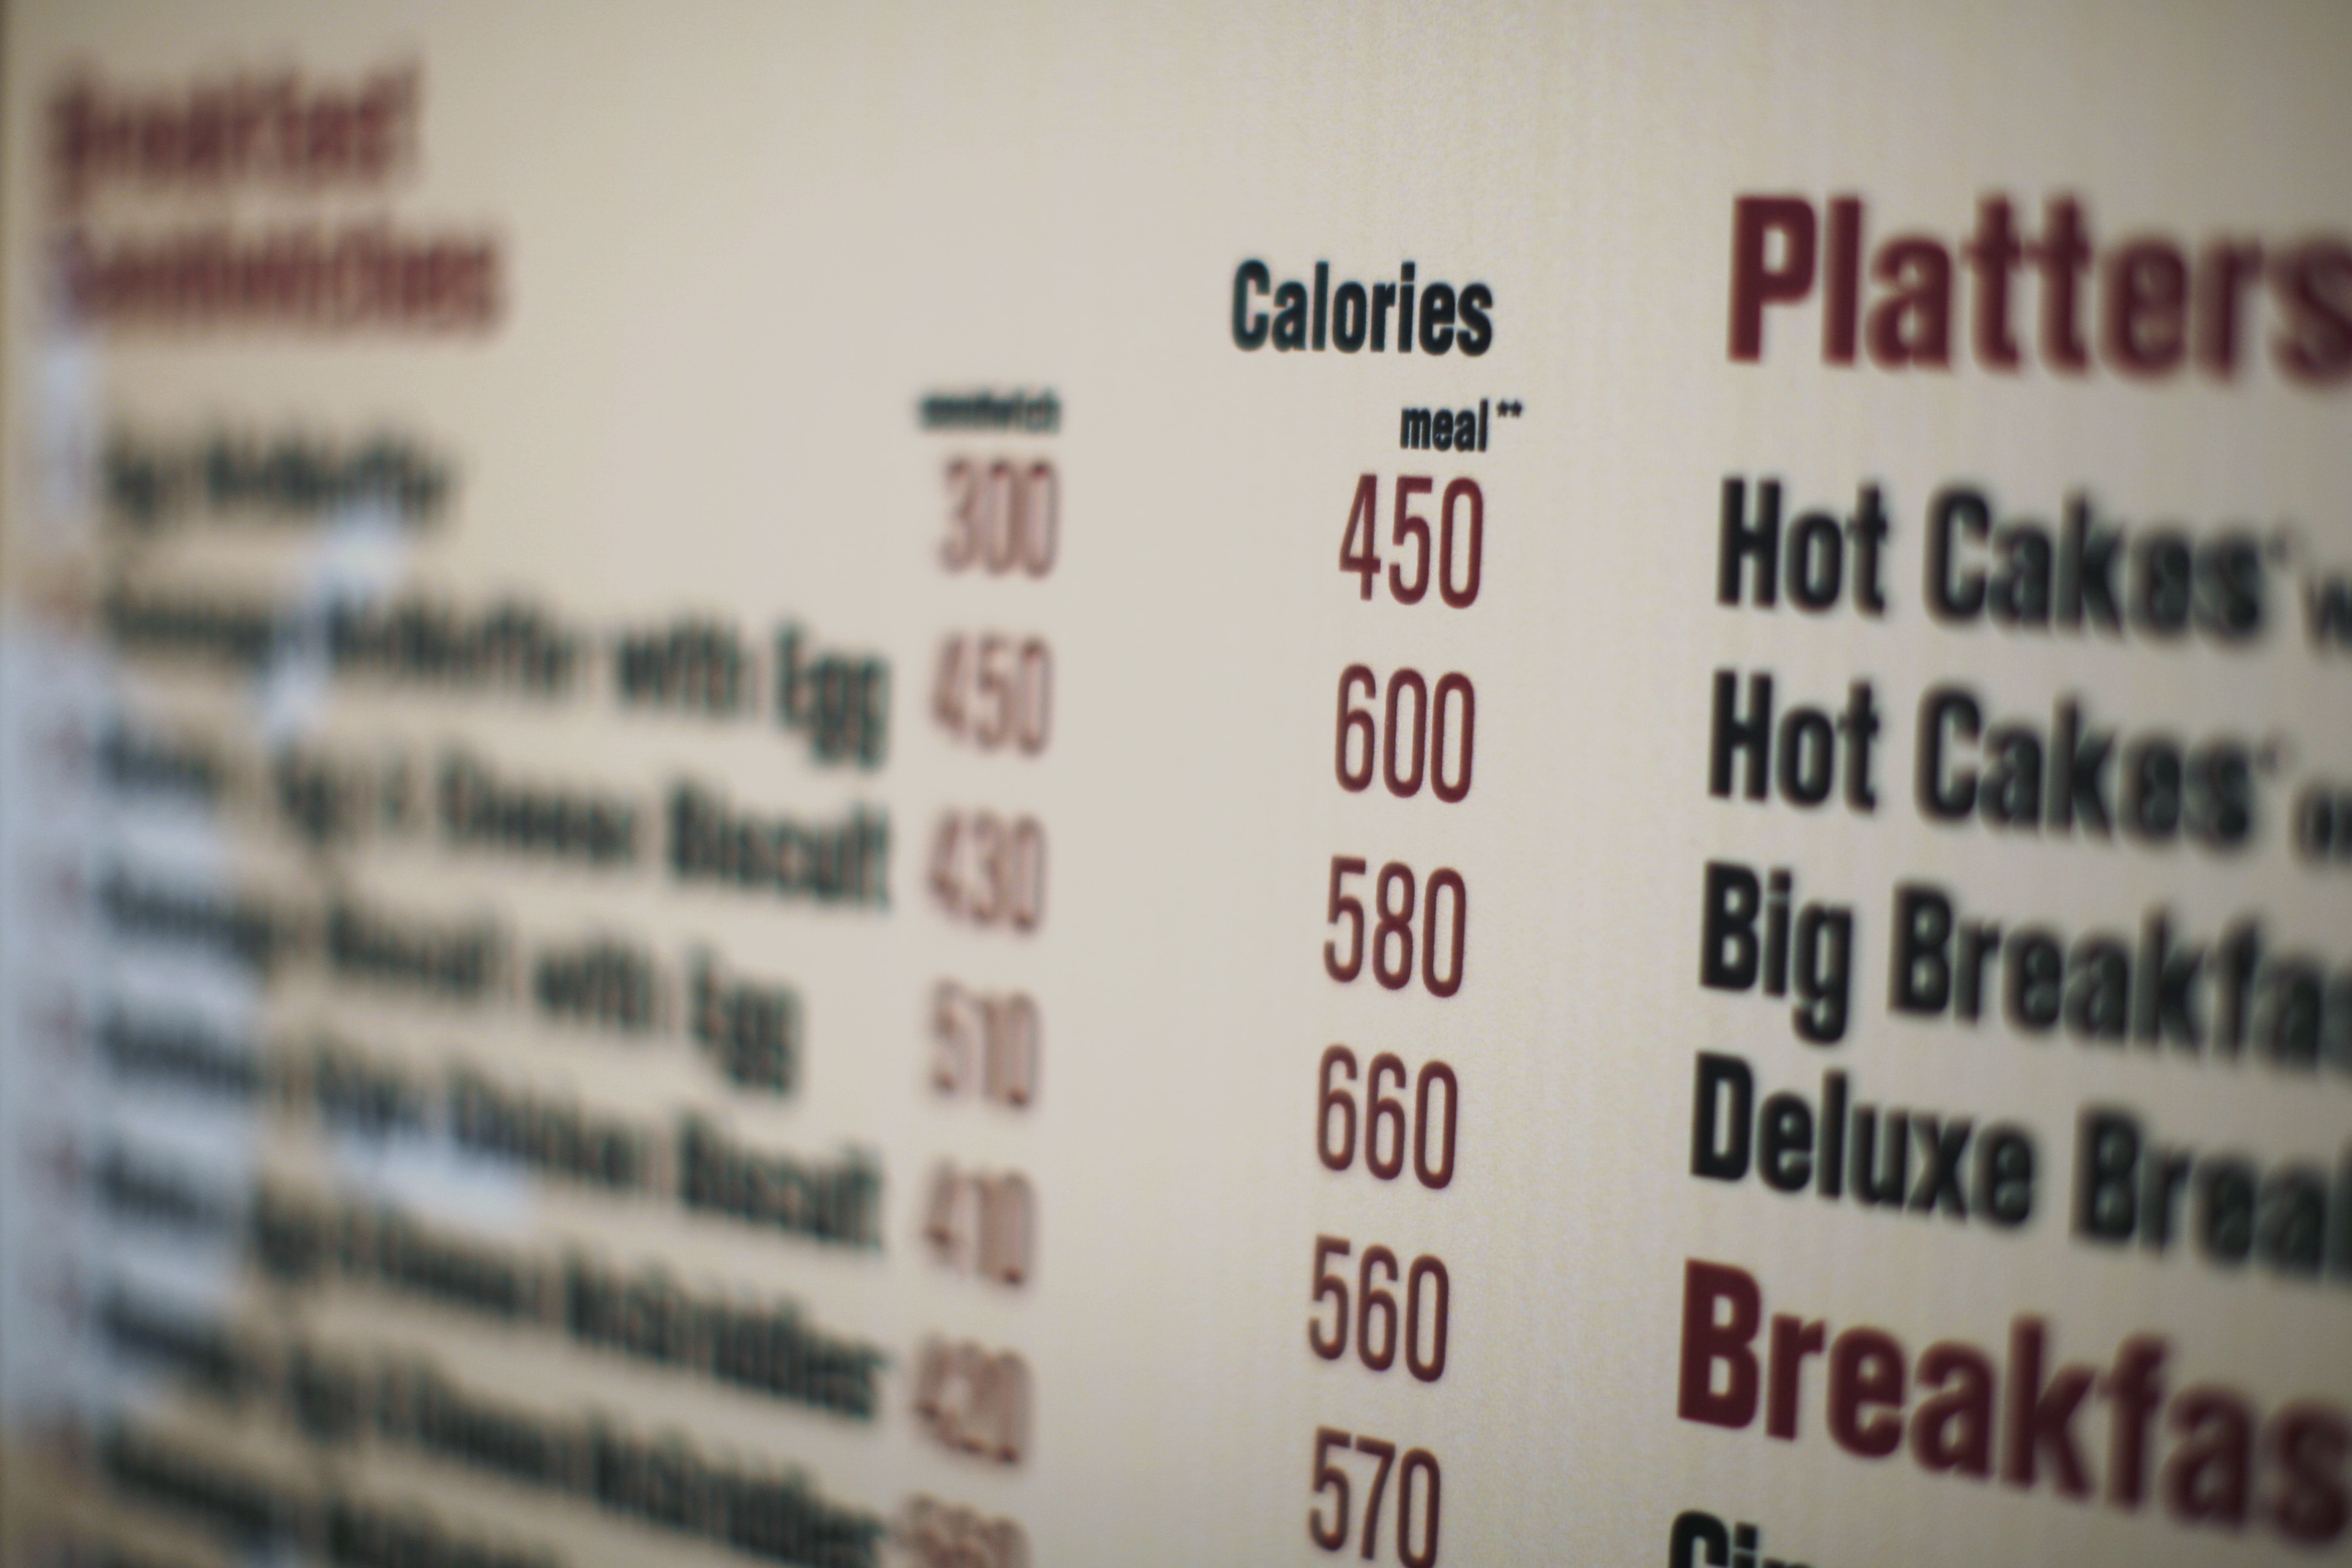 Survey: More people using menu calorie information